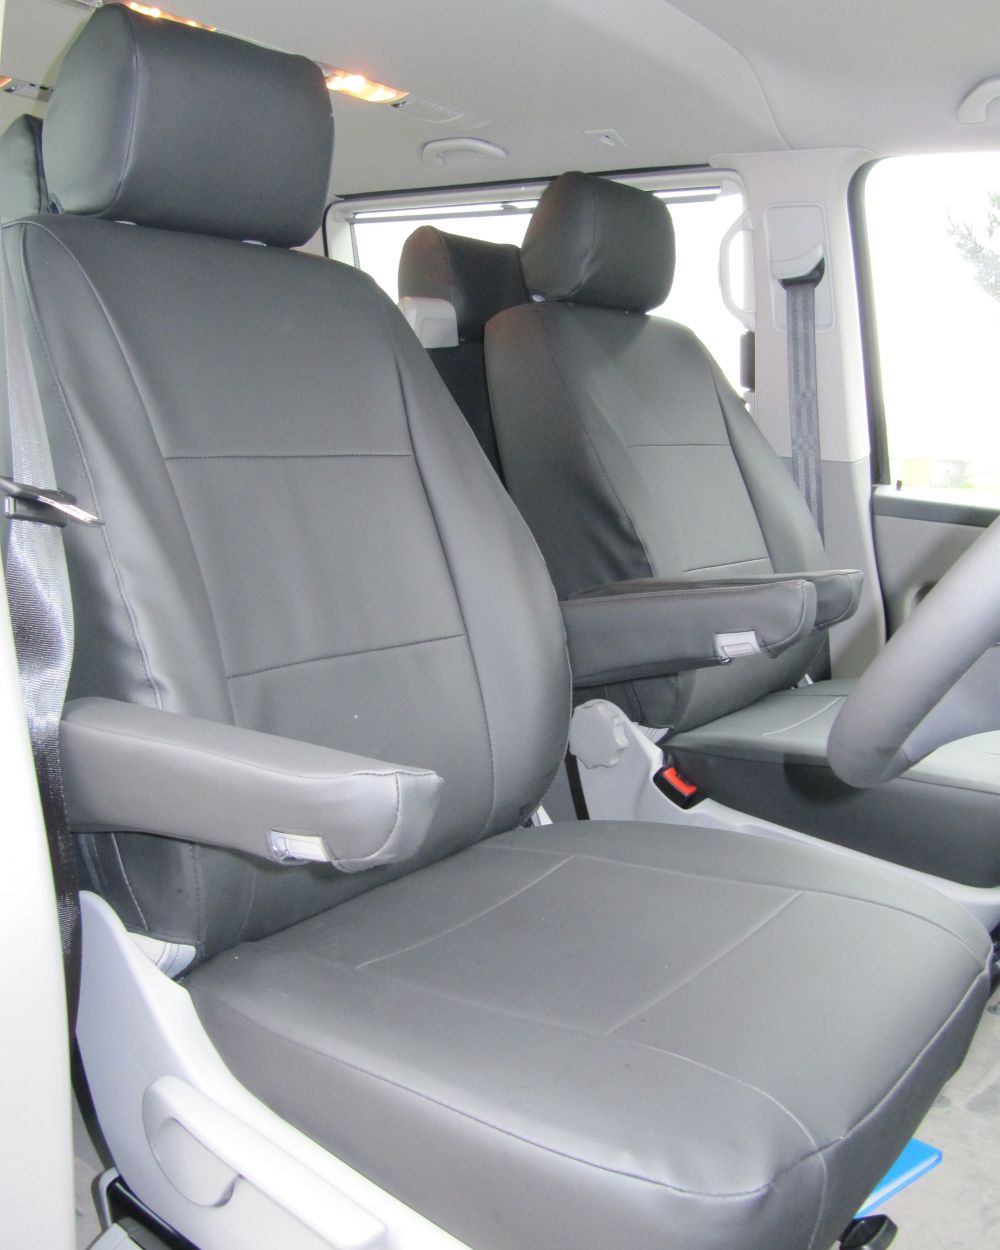 The Washington NLBD2 Standard 2 Seat Covers